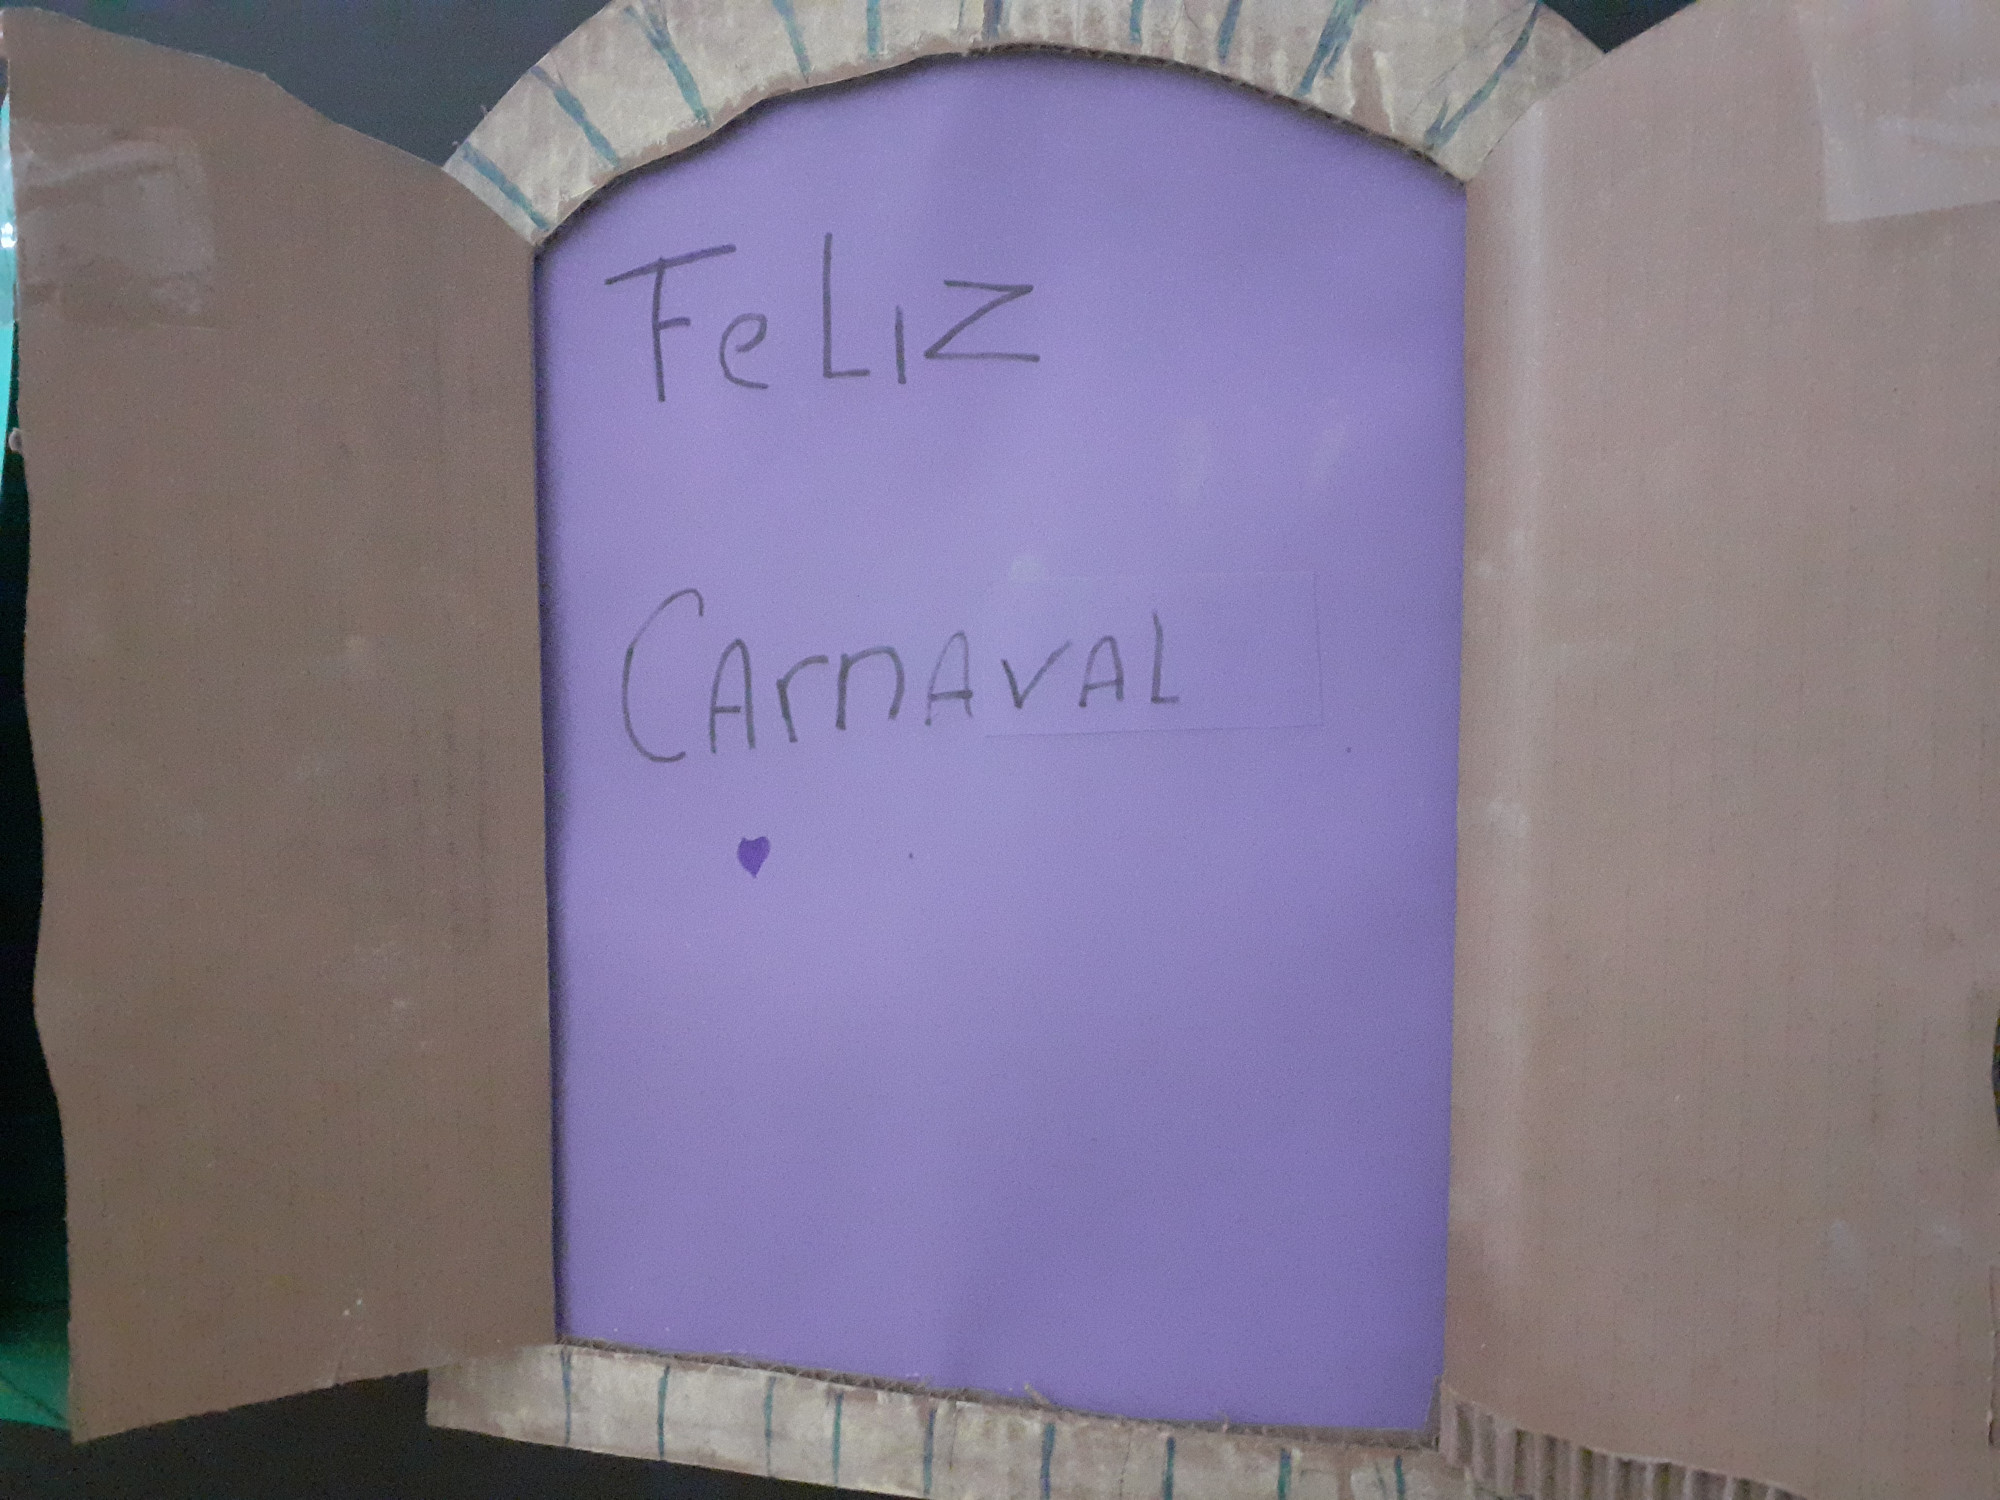 Ventana de cartón donde dice Feliz Carnaval